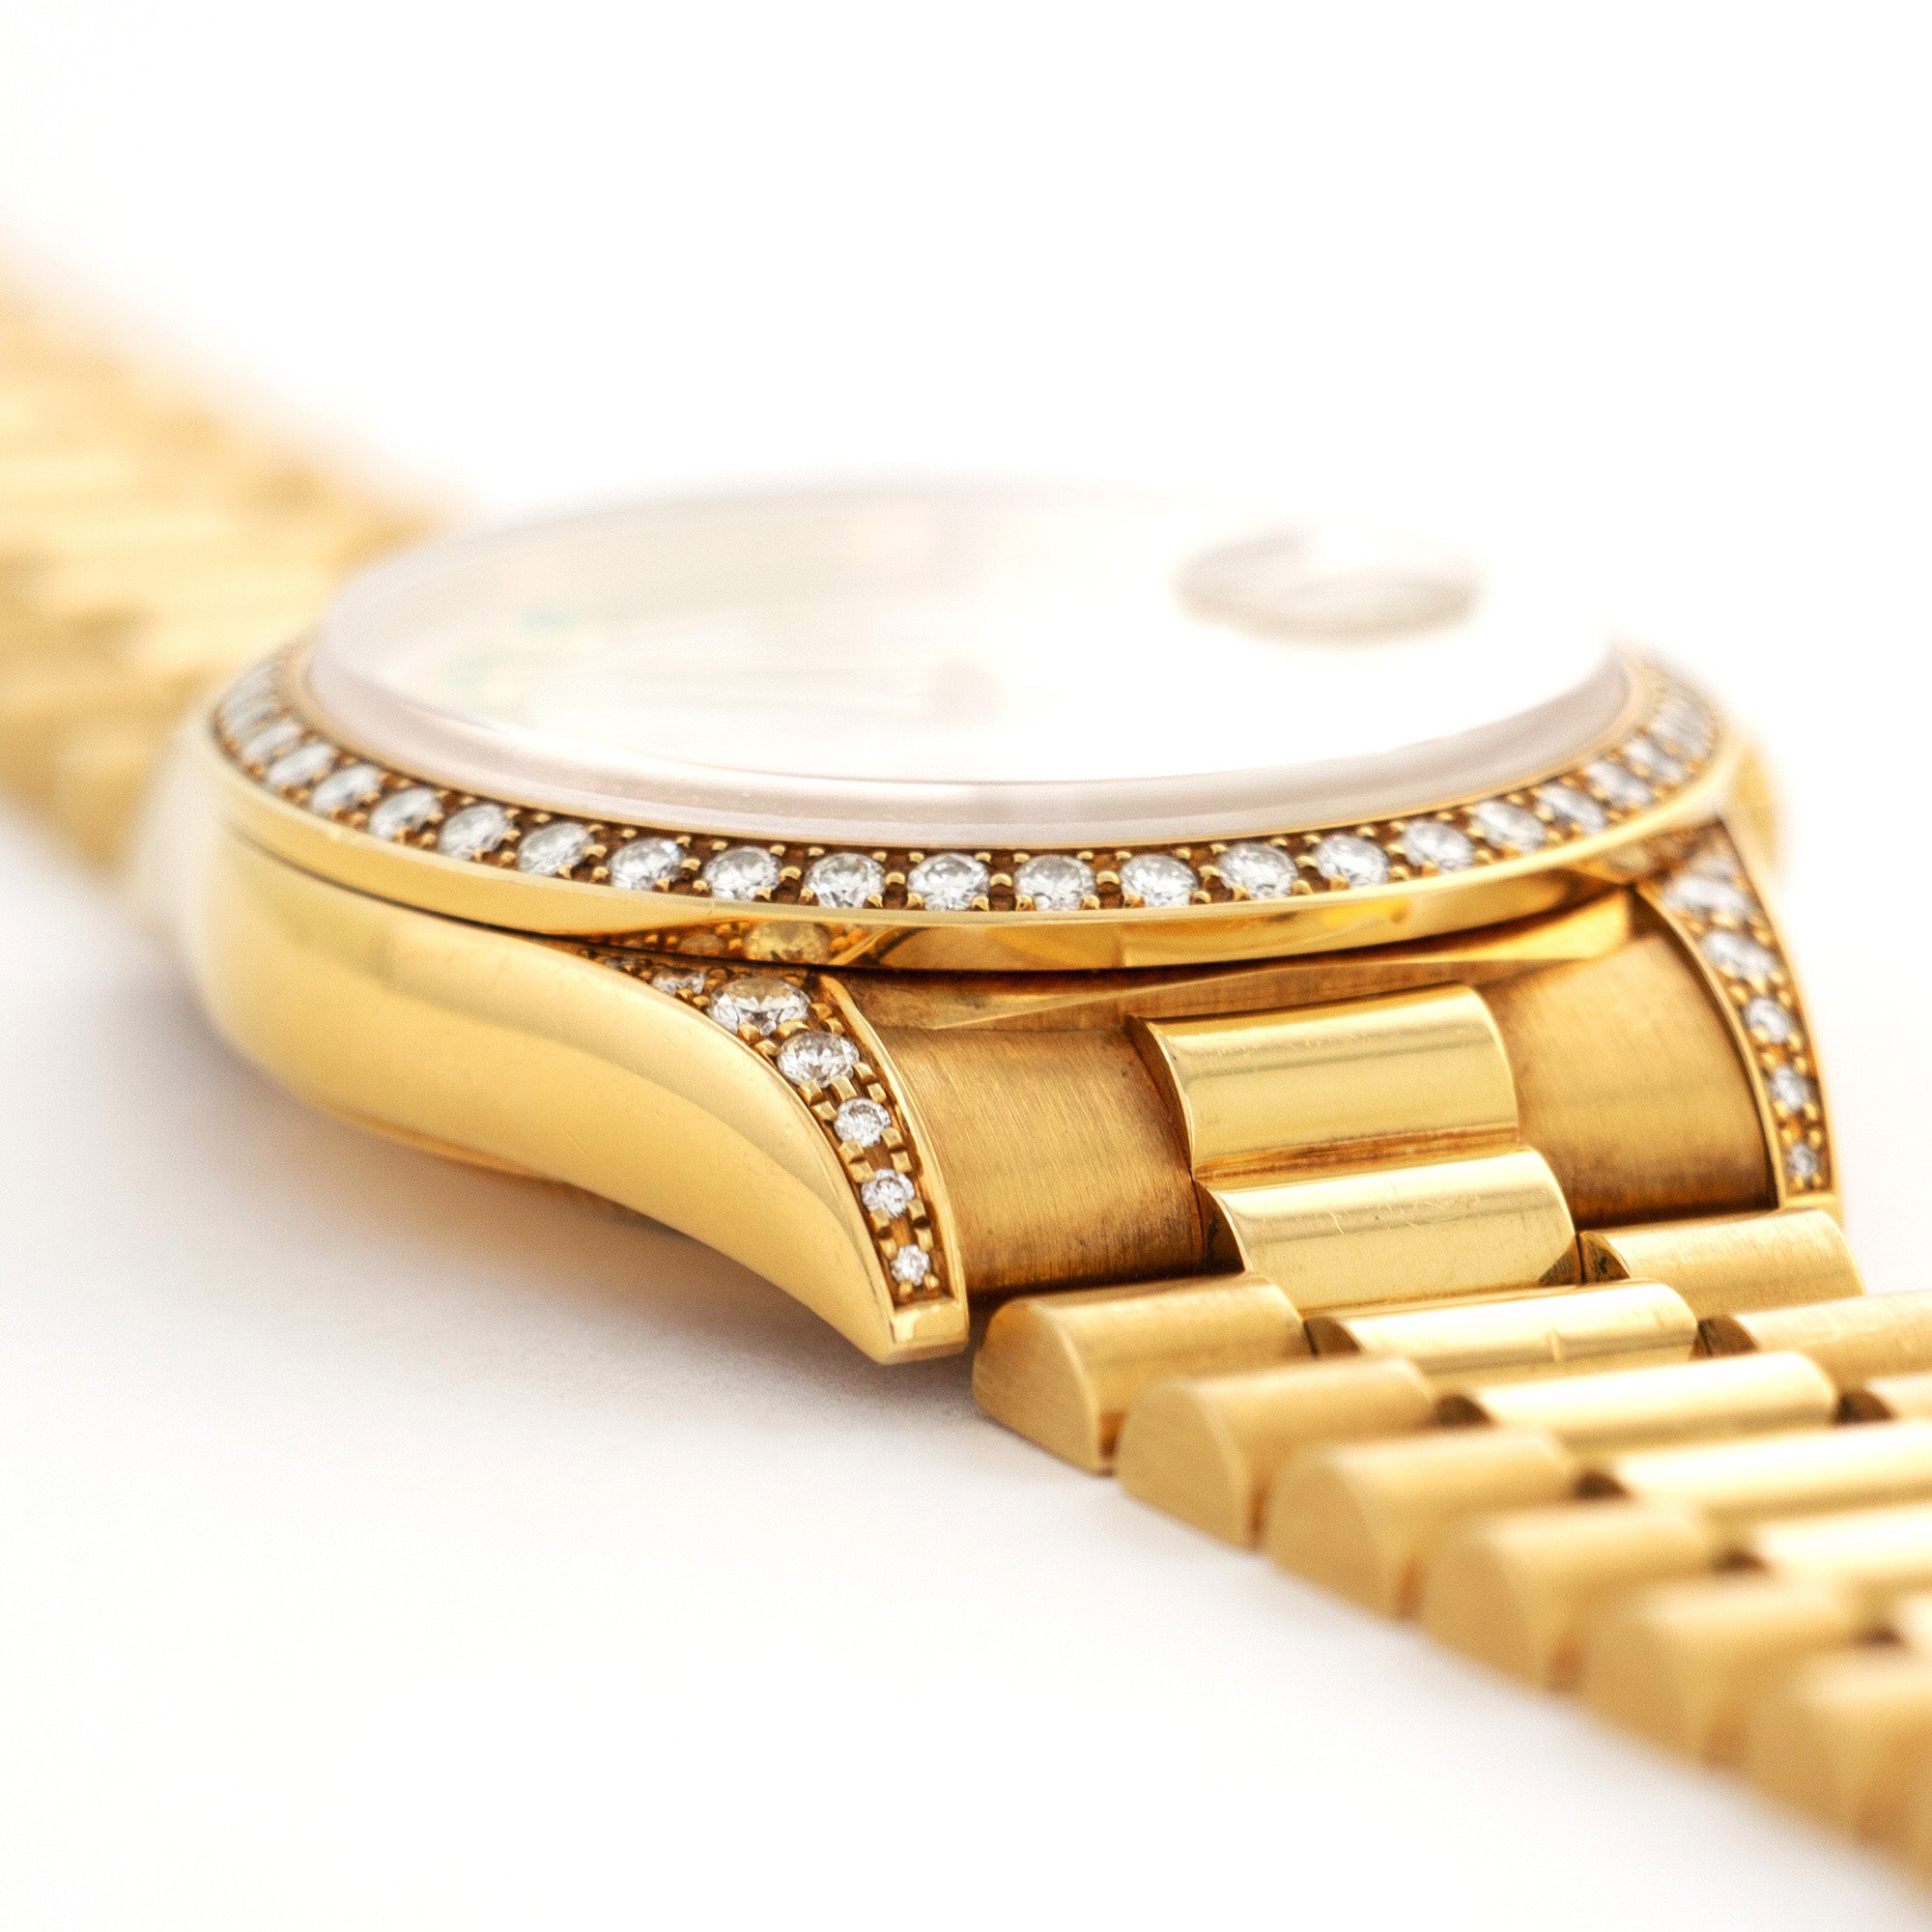 Rolex Yellow Gold Day-Date Diamond &amp; Emerald Watch Ref. 18388